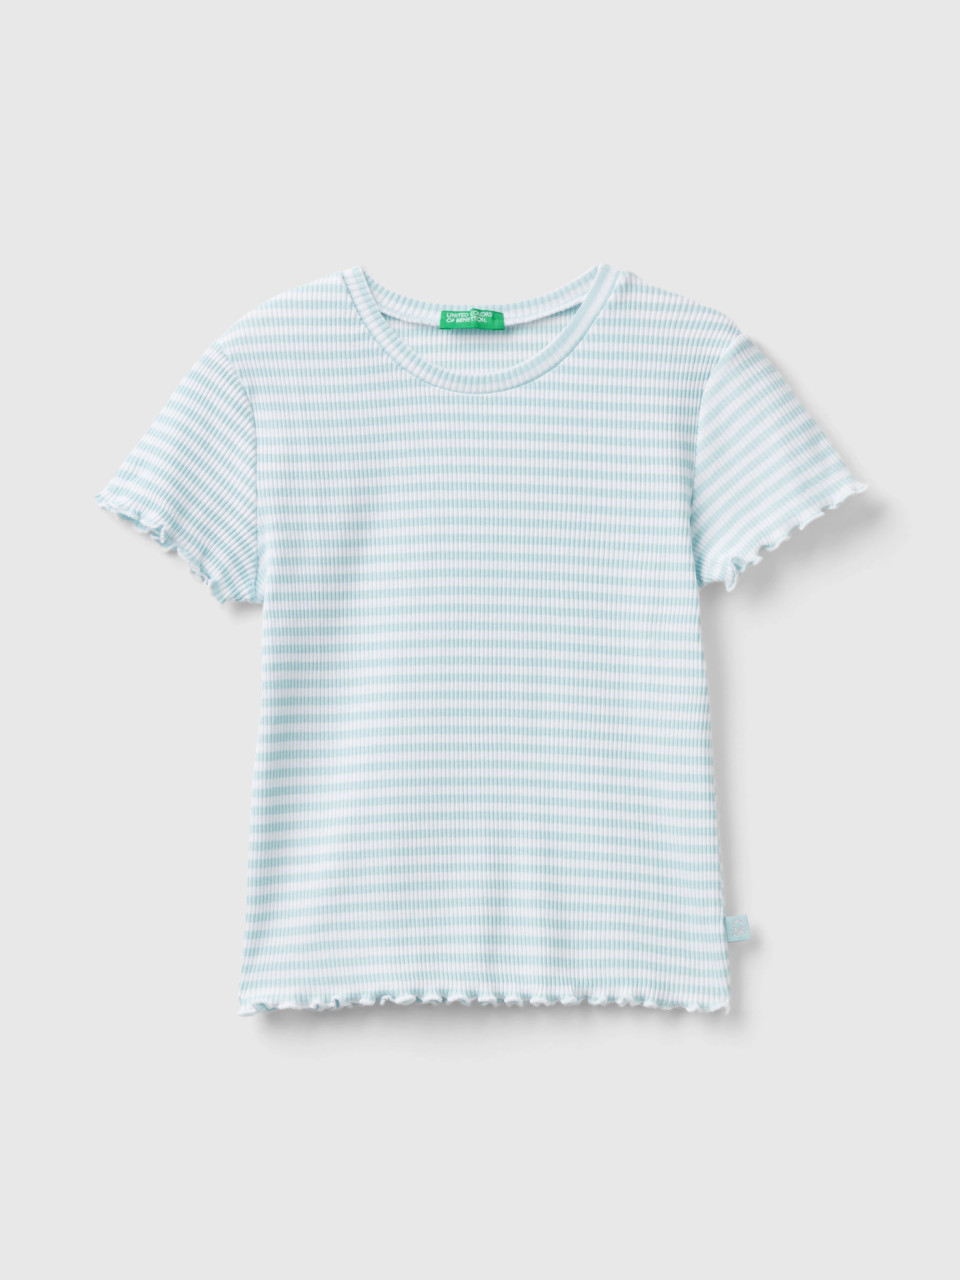 Benetton, Striped Stretch Cotton T-shirt, Aqua, Kids